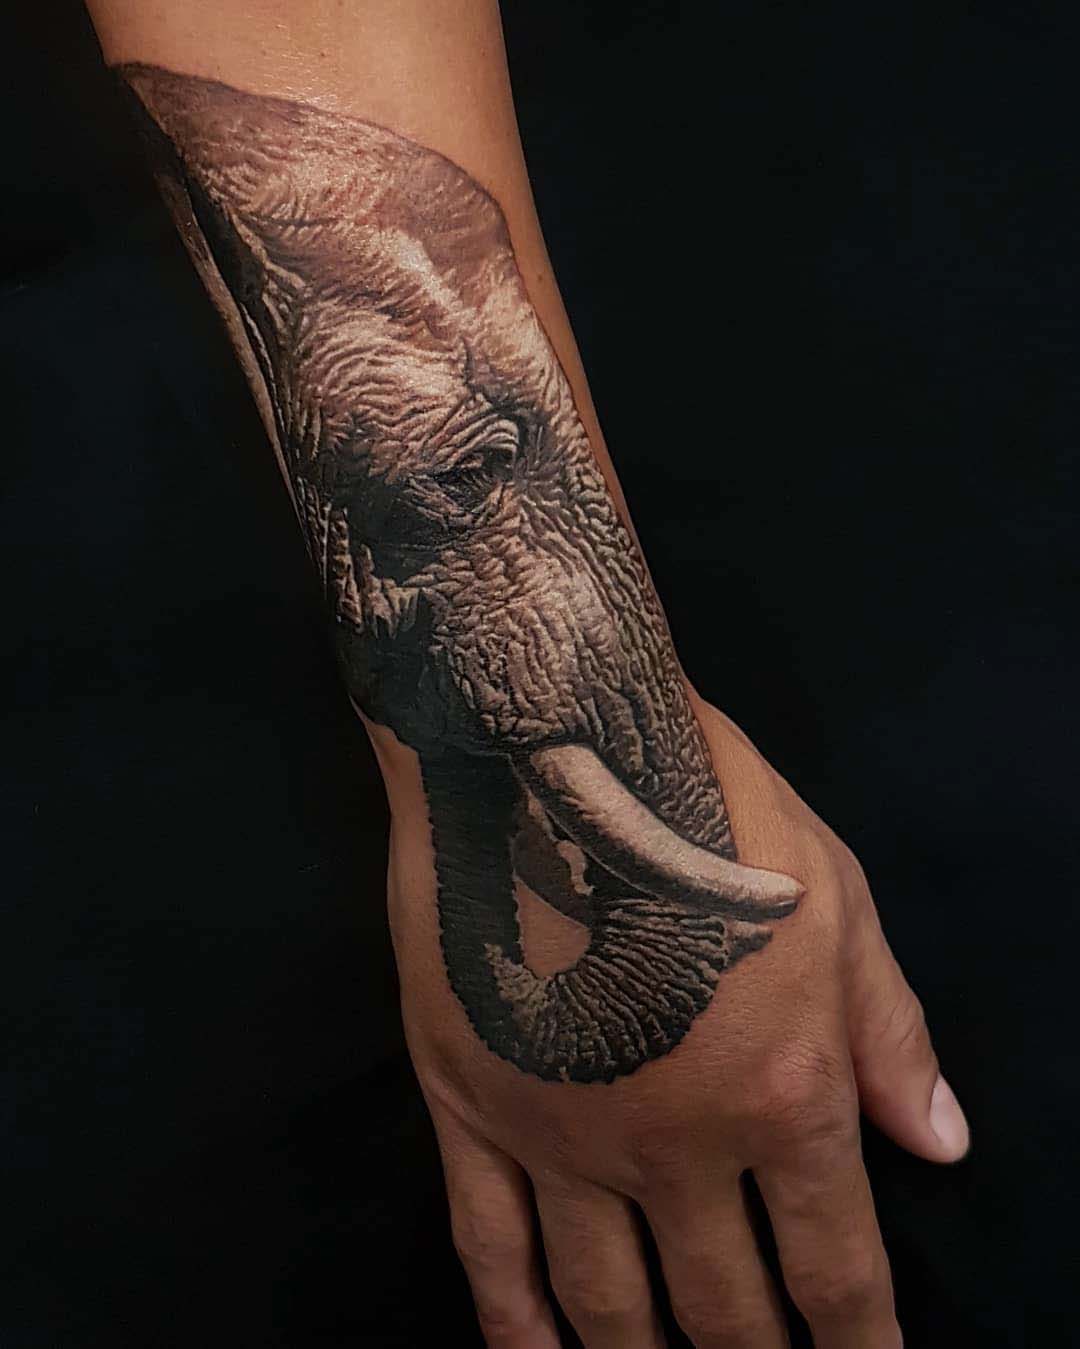 Elephant Tattoo on Wrist - Best Tattoo Ideas Gallery